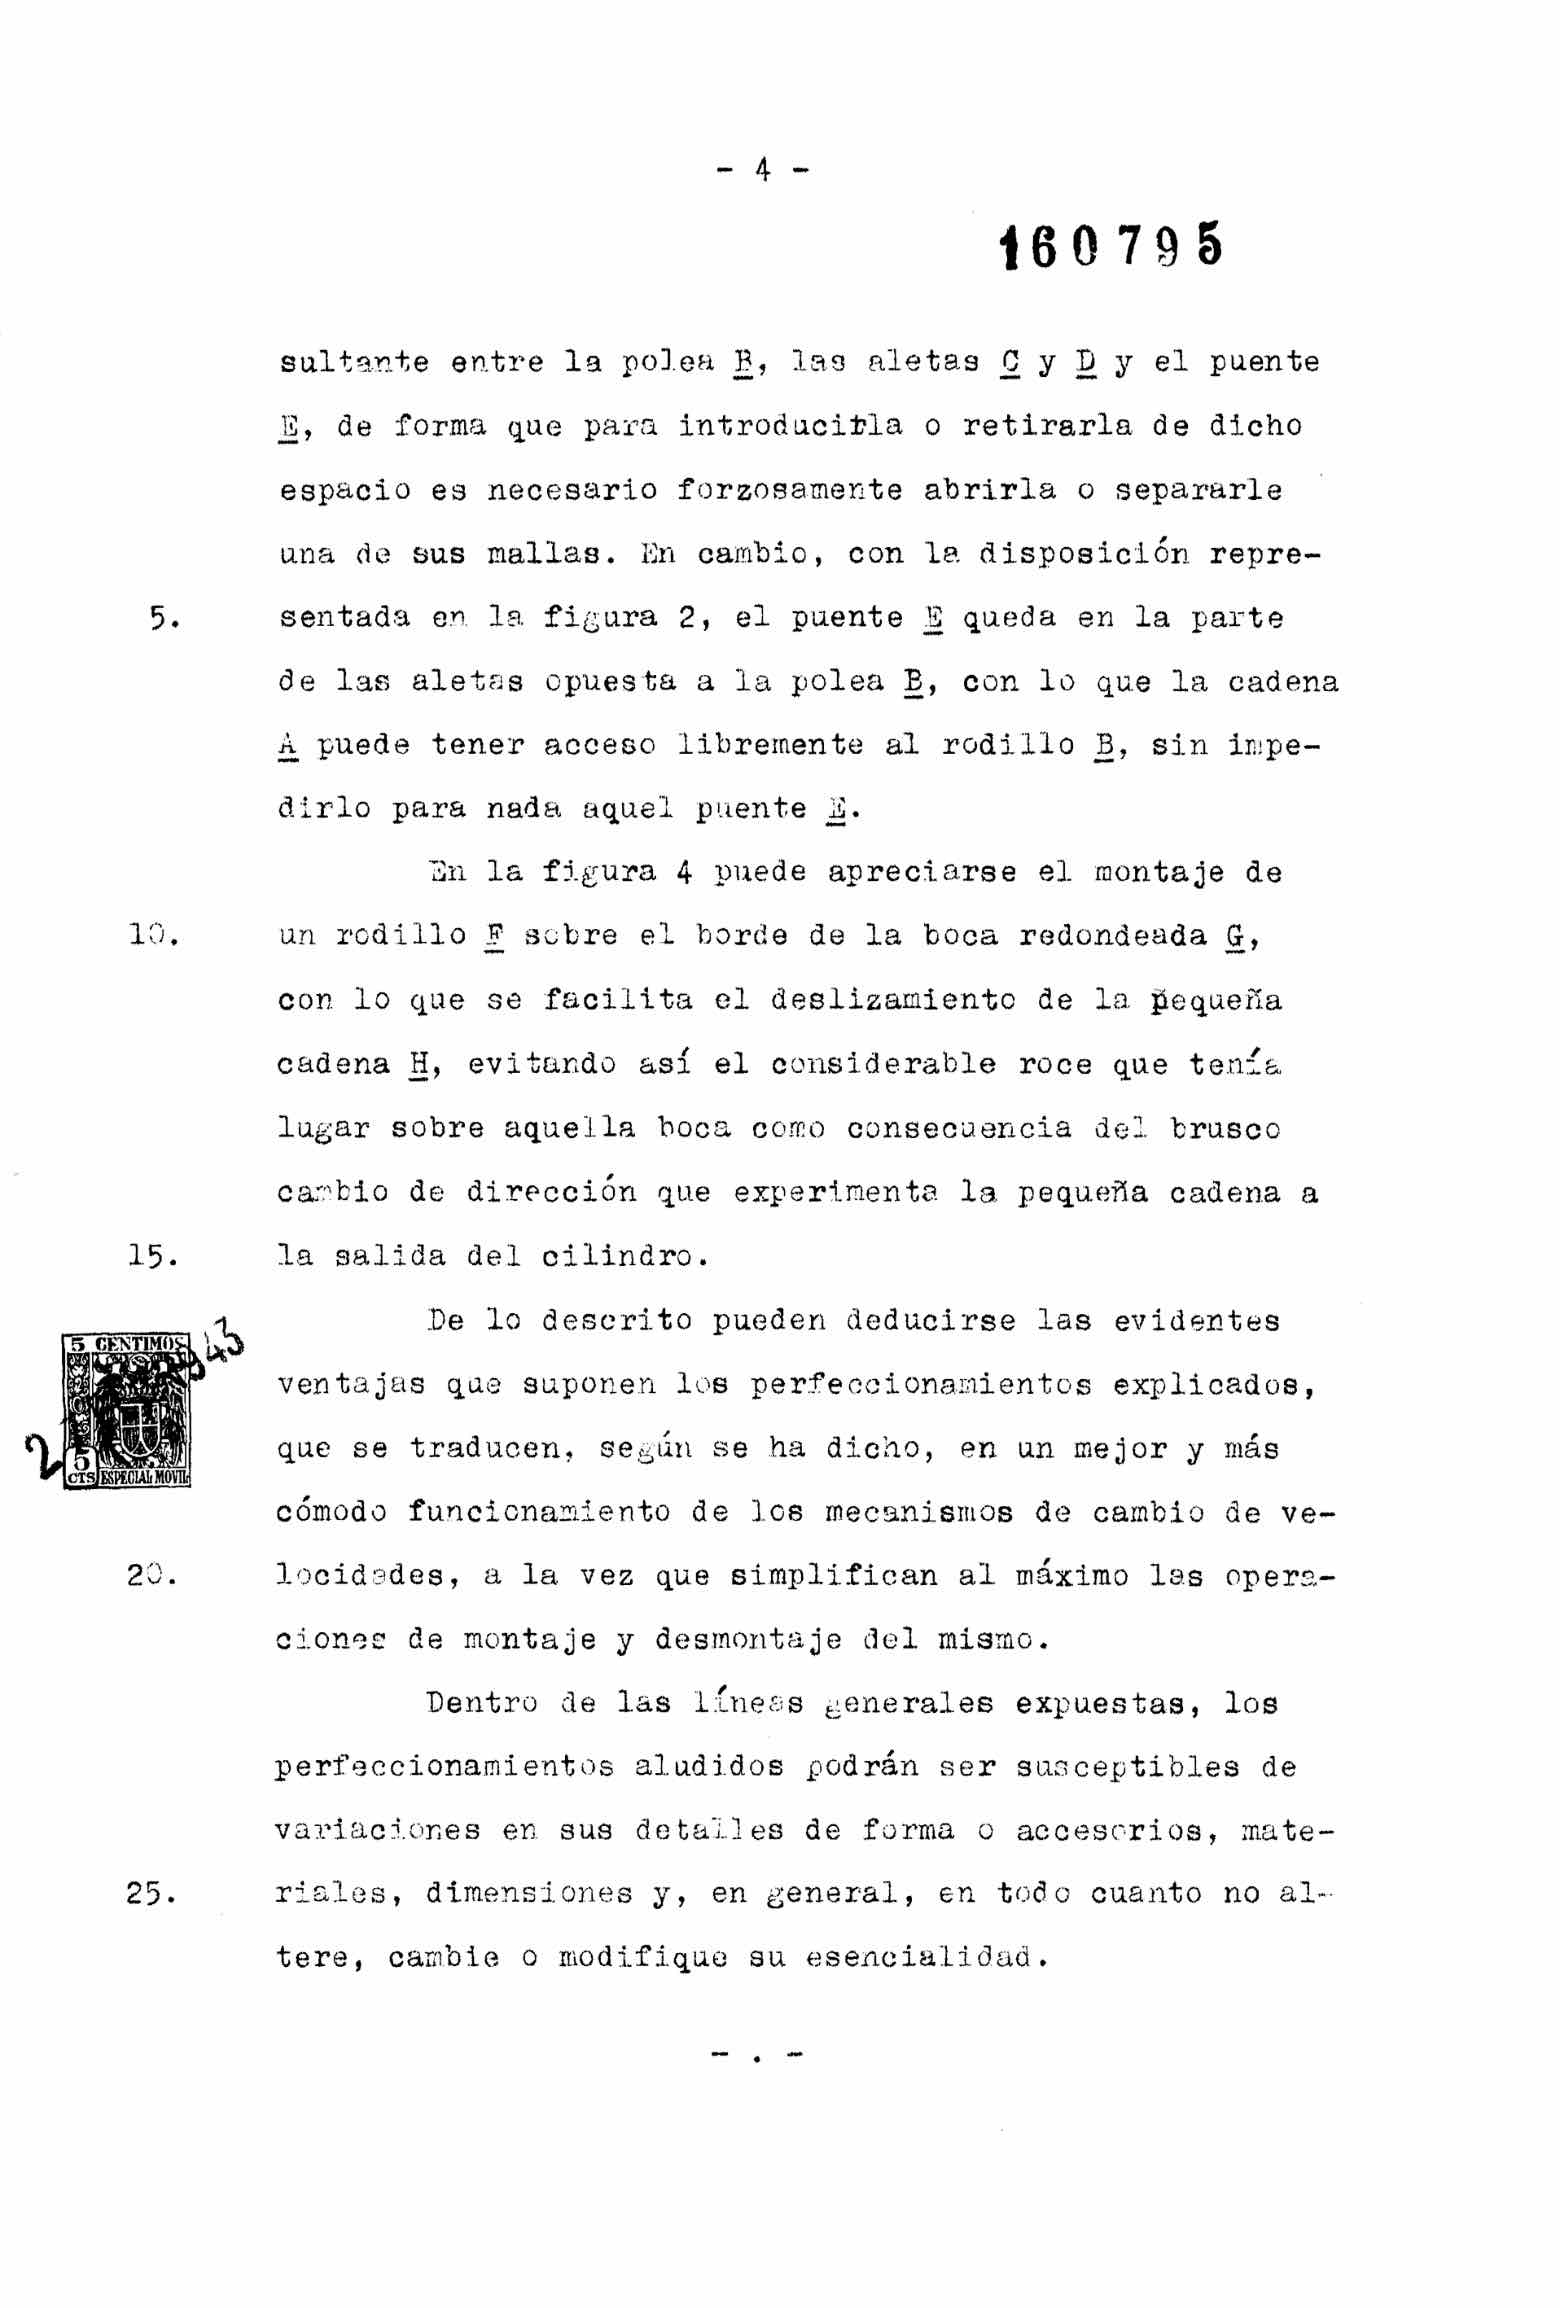 Spanish Patent 160,795 - Zeus scan 4 main image